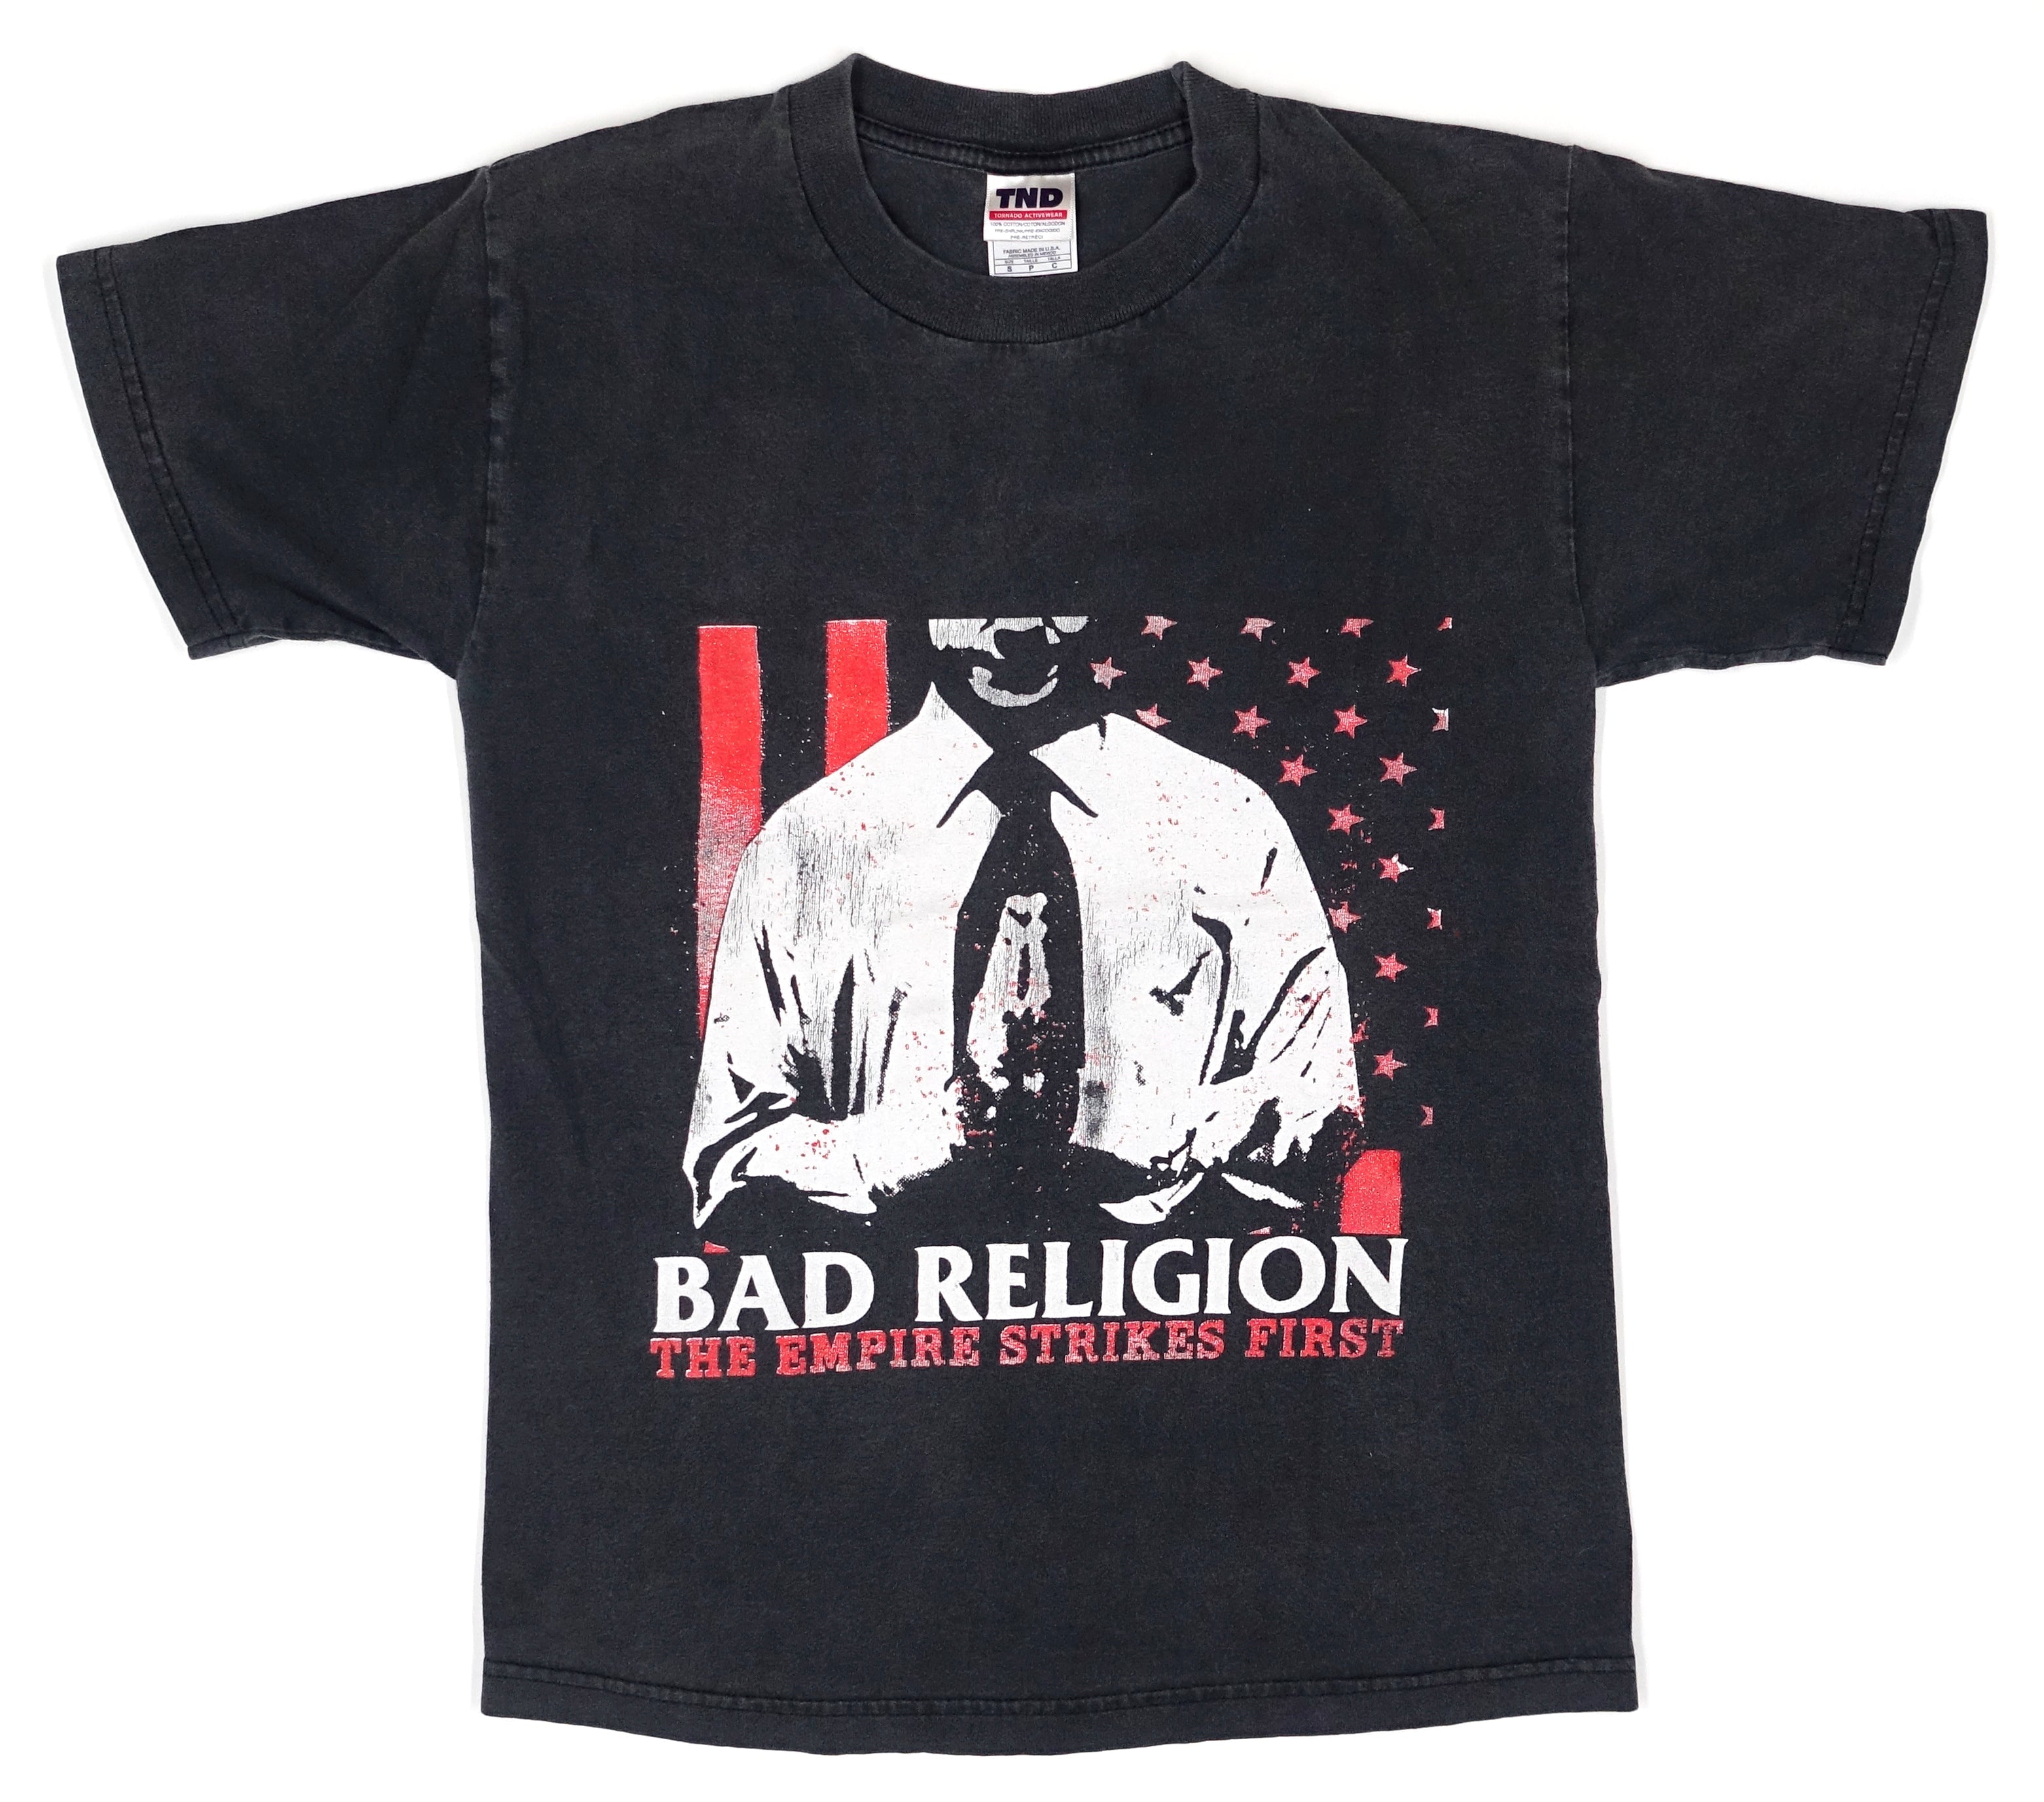 Bad Religion - Empire Strikes First 2004 Tour Shirt Size Small